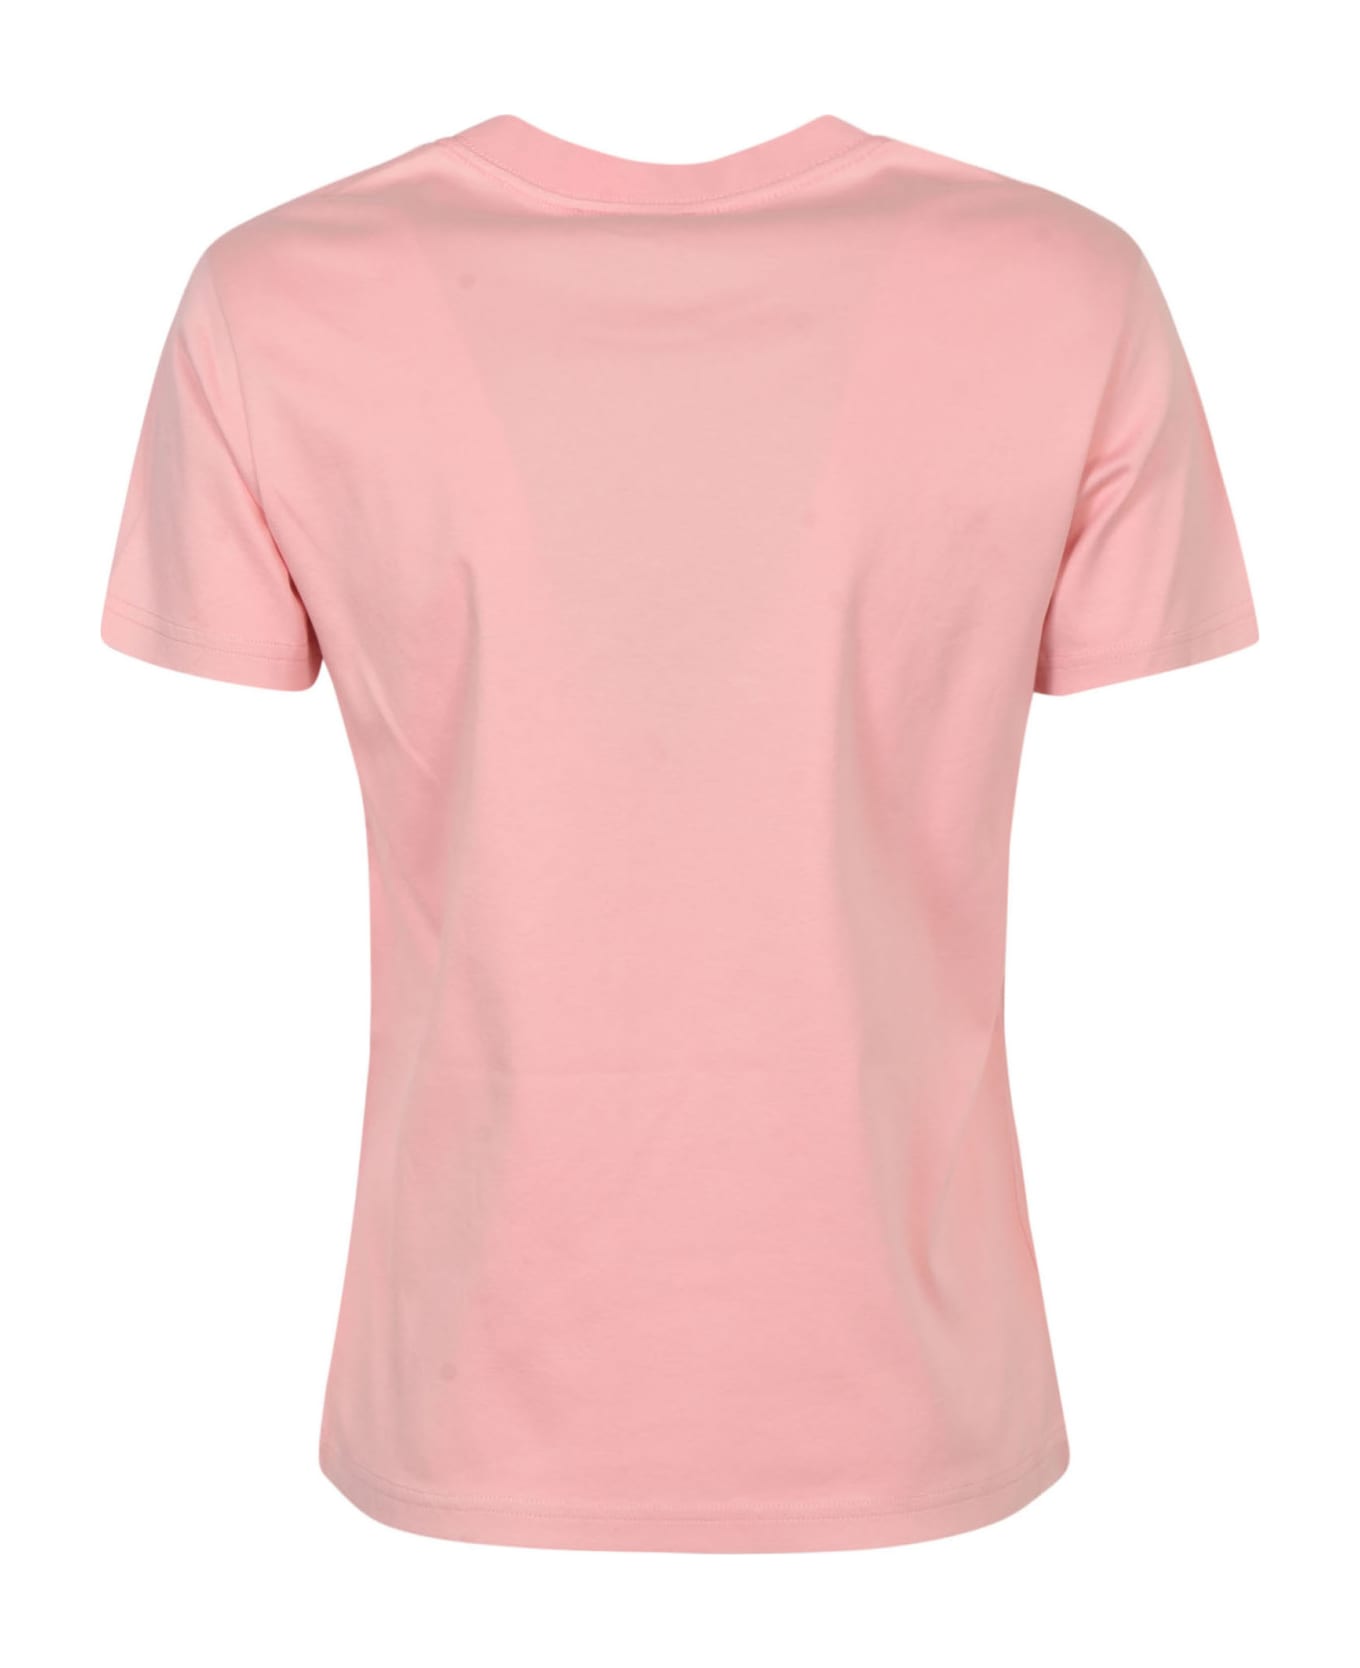 Lanvin Curb T-shirt - Pink